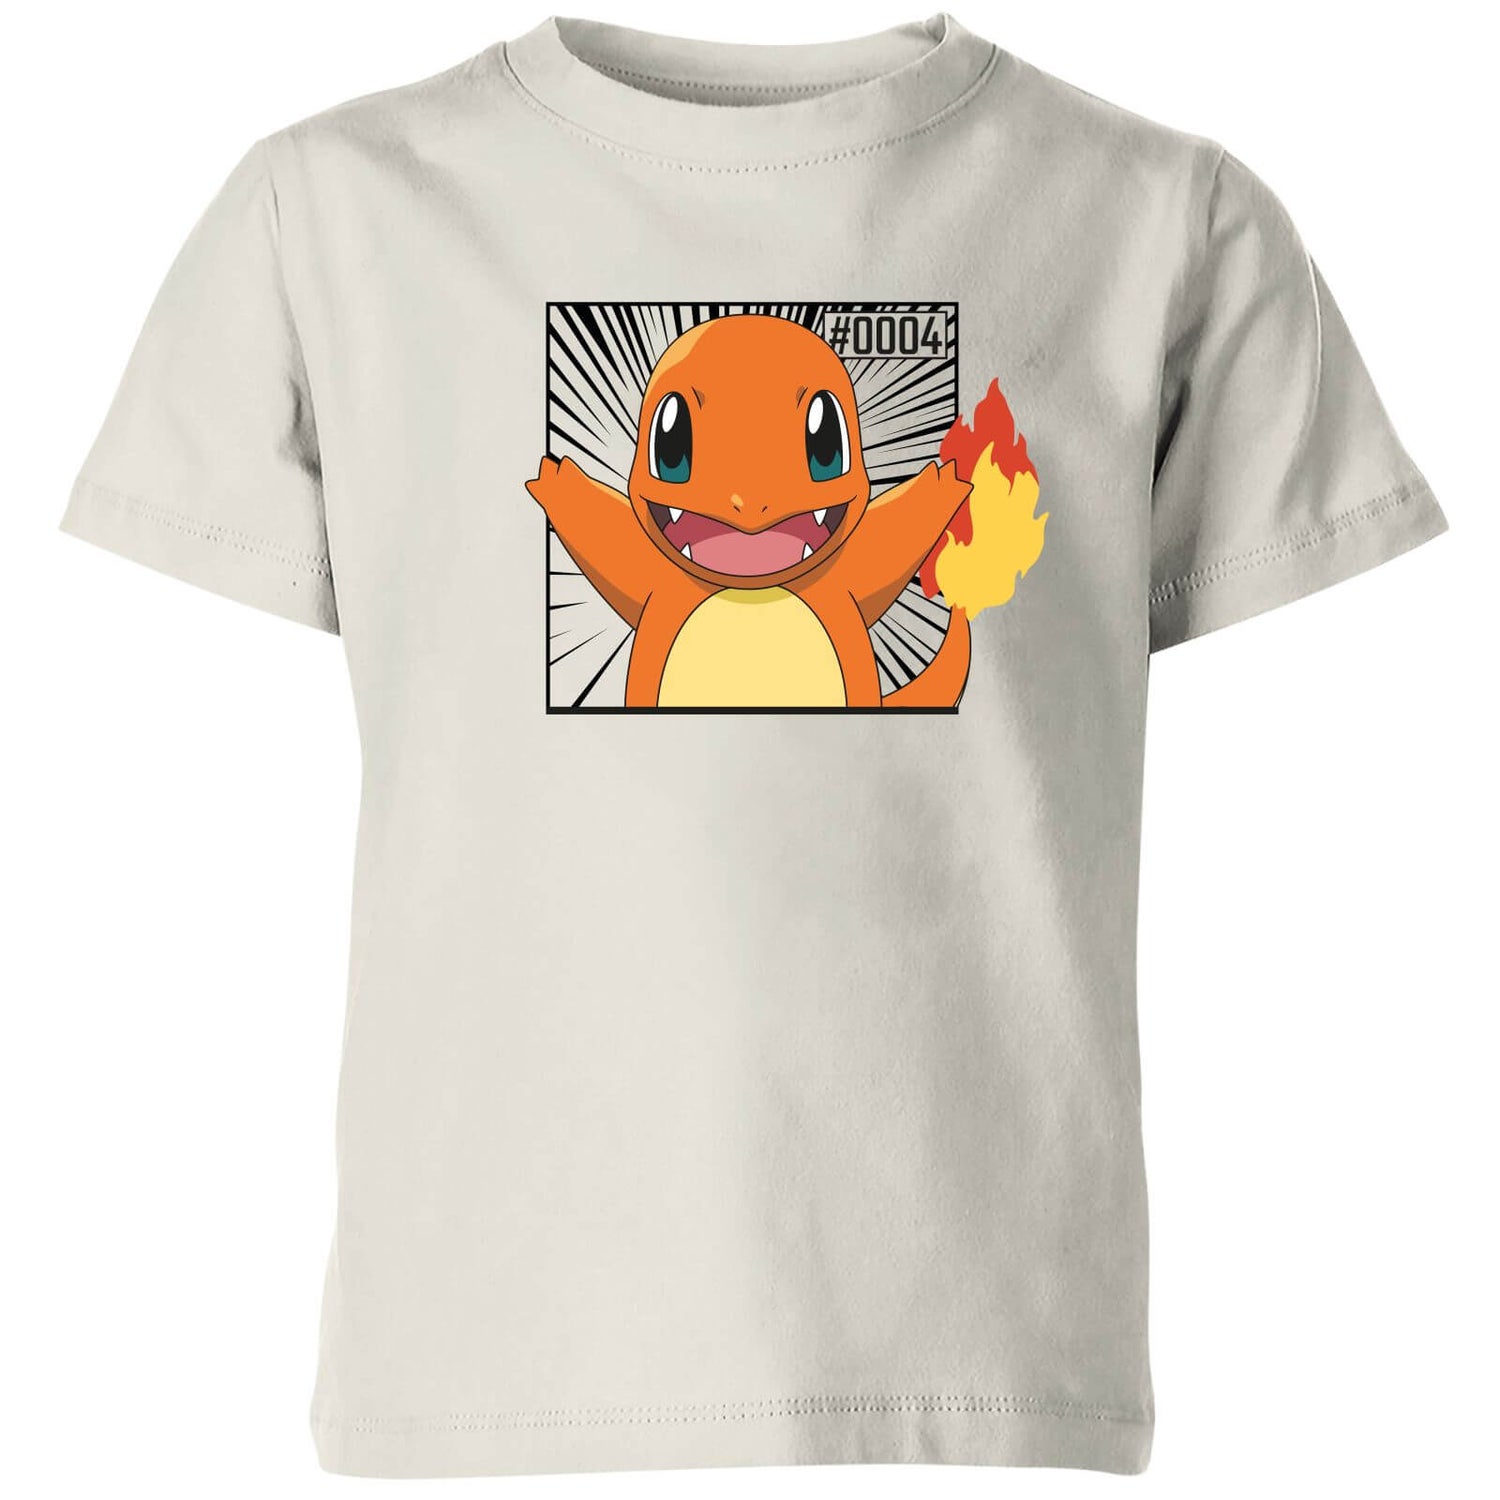 Pokémon Pokédex Charmander #0004 Kids' T-Shirt - Cream